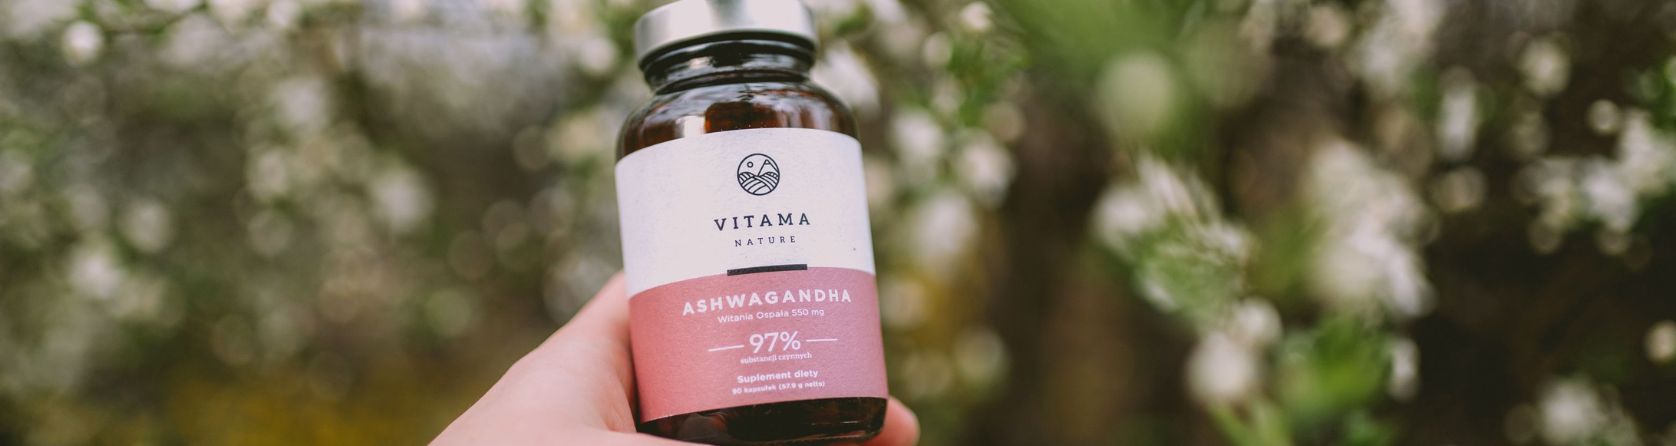 ashwaganda - korzyści stosowania vitama nature